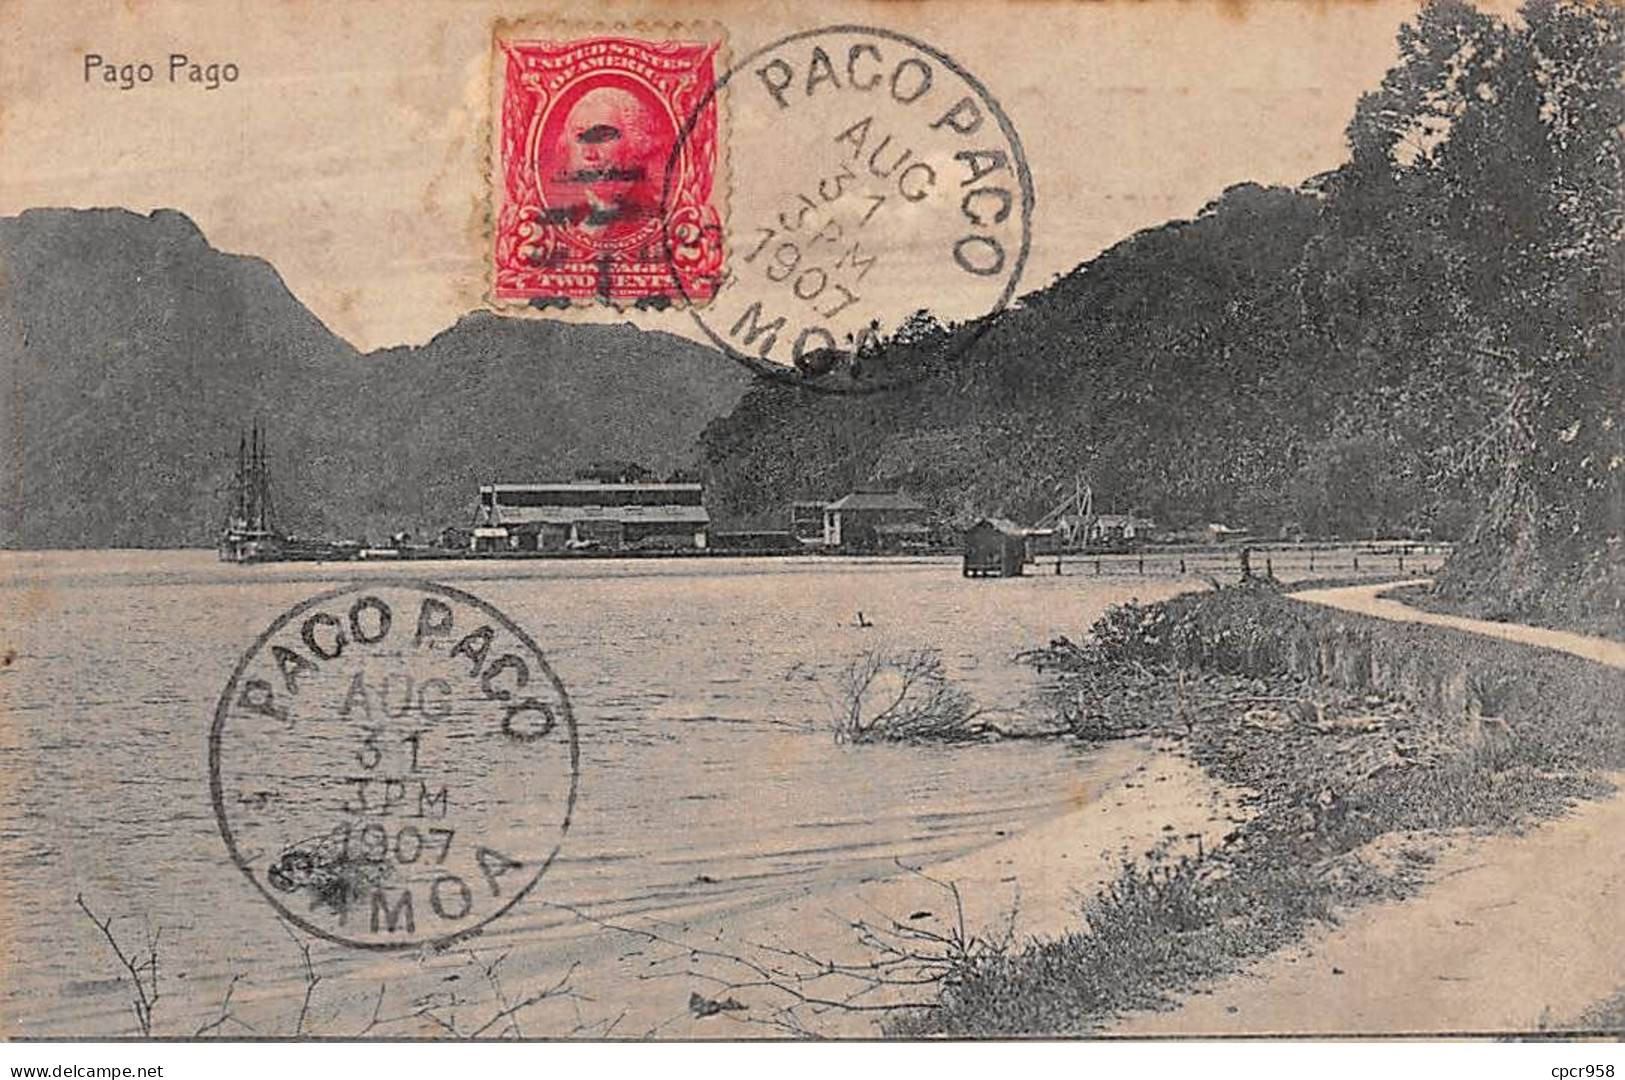 Samoa Américaine - N°78740 - Pago Pago - AFFRANCHISSEMENT DE COMPLAISANCE - Samoa Americana